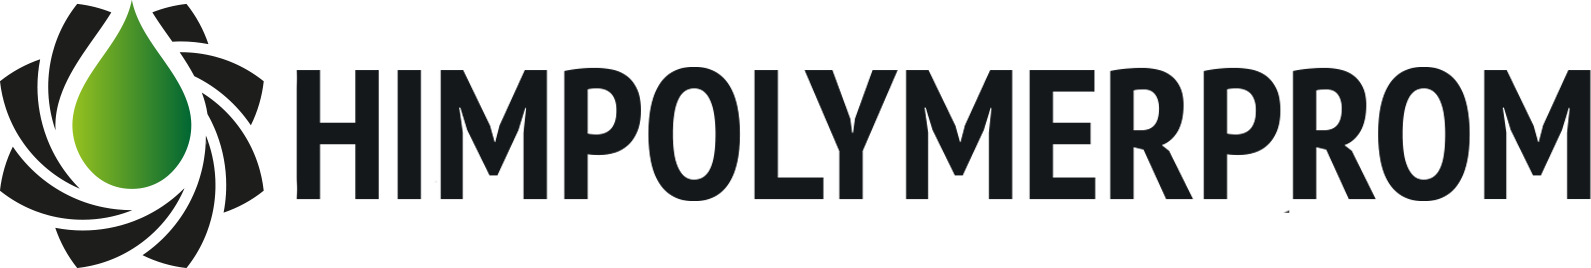 Himpolymerprom logo